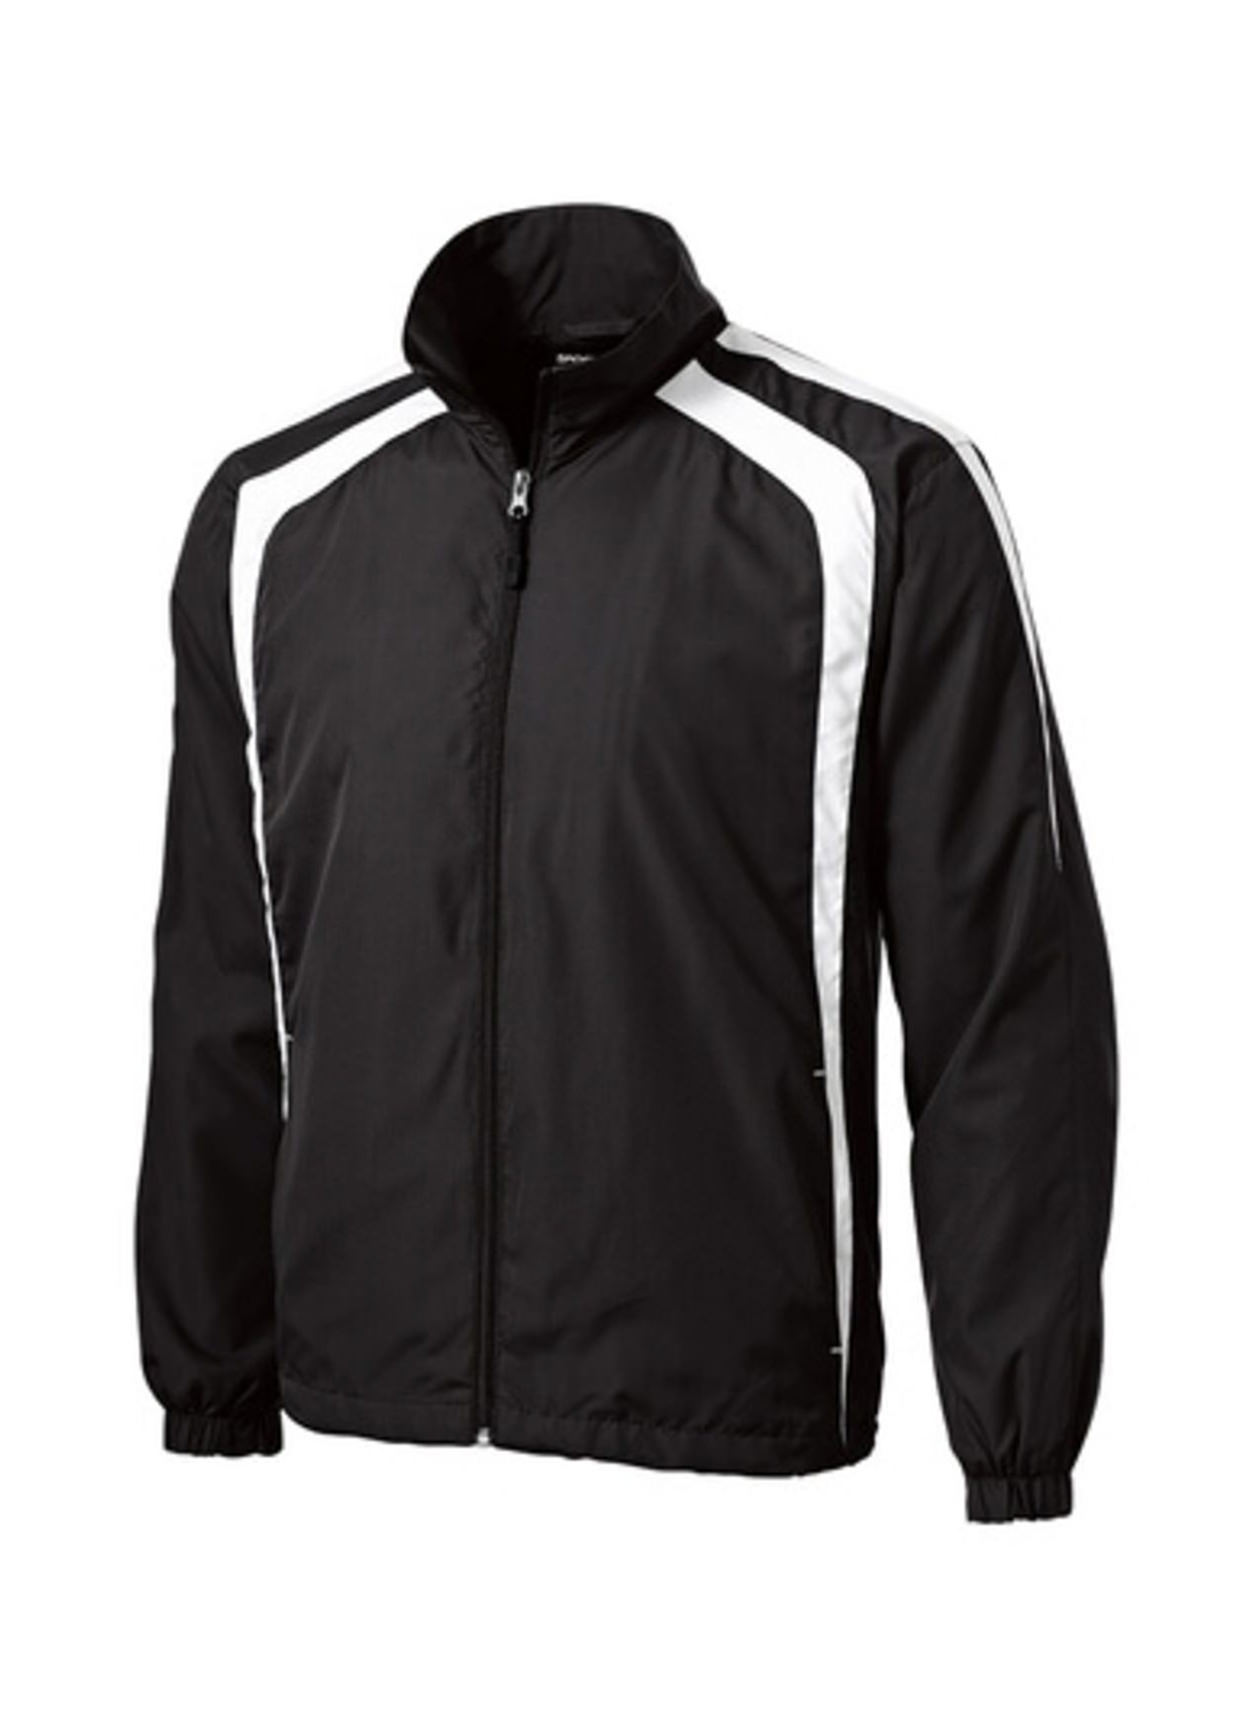 SPORT-TEK Men's Black / White Colorblock Raglan Jacket